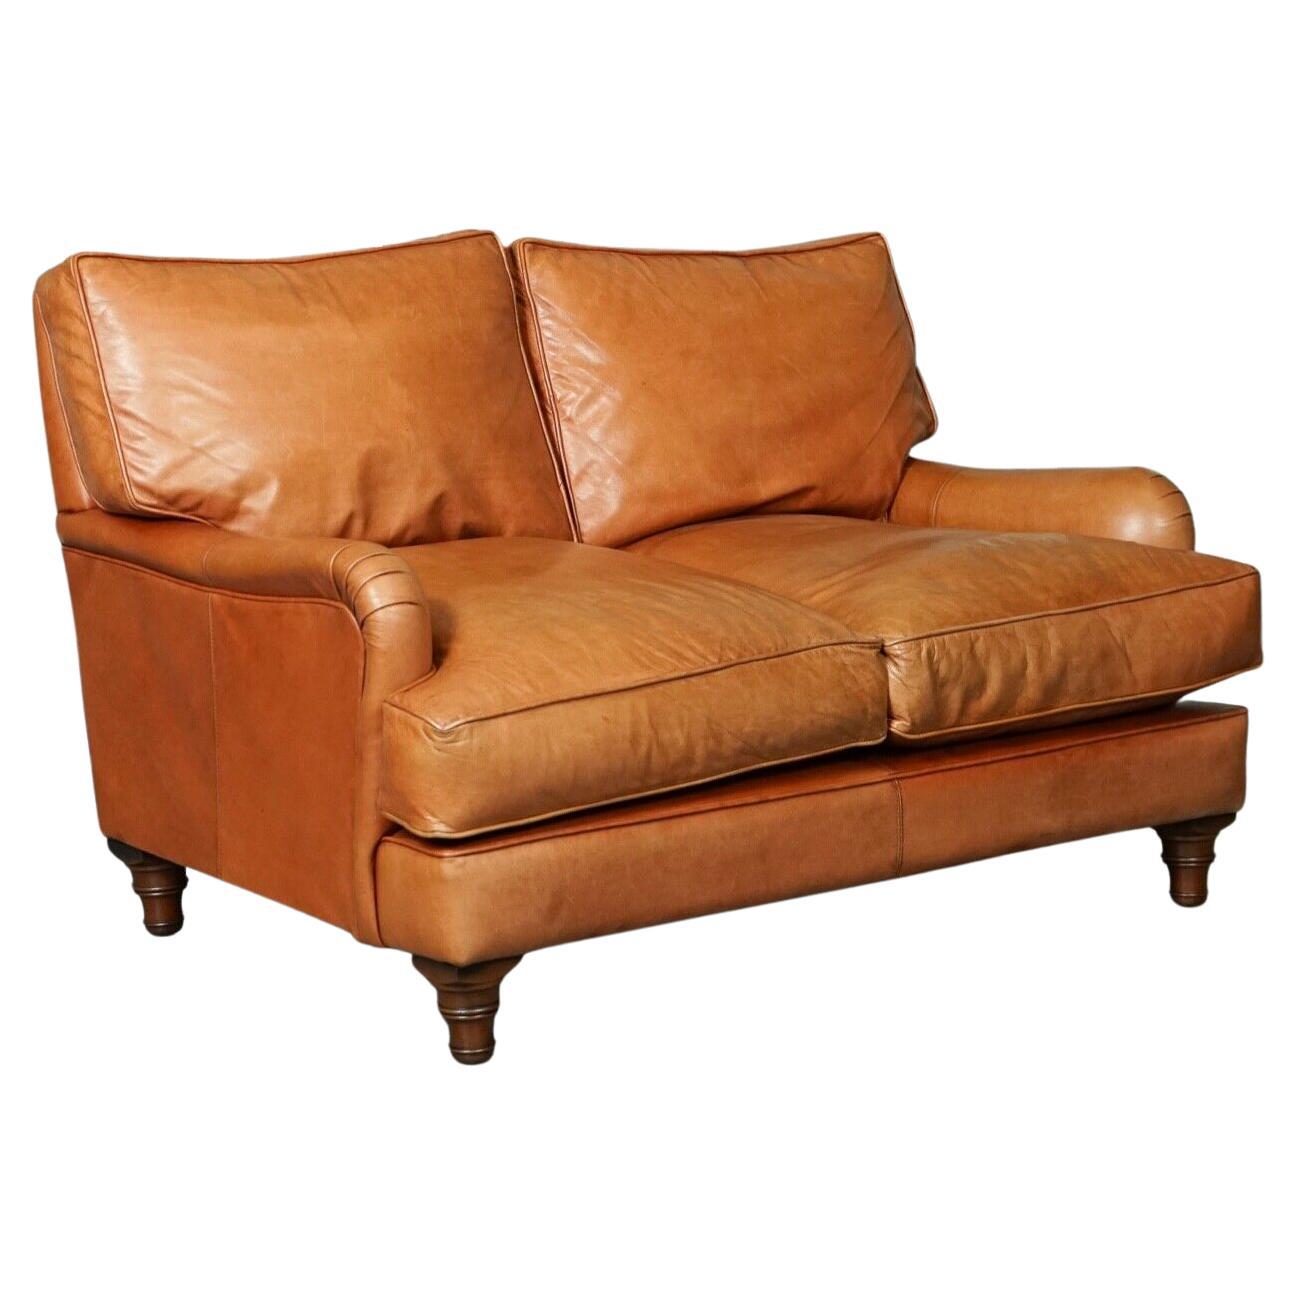 Stunning Large Vintage Tan Leather Contemporary Designer Sofa For Sale